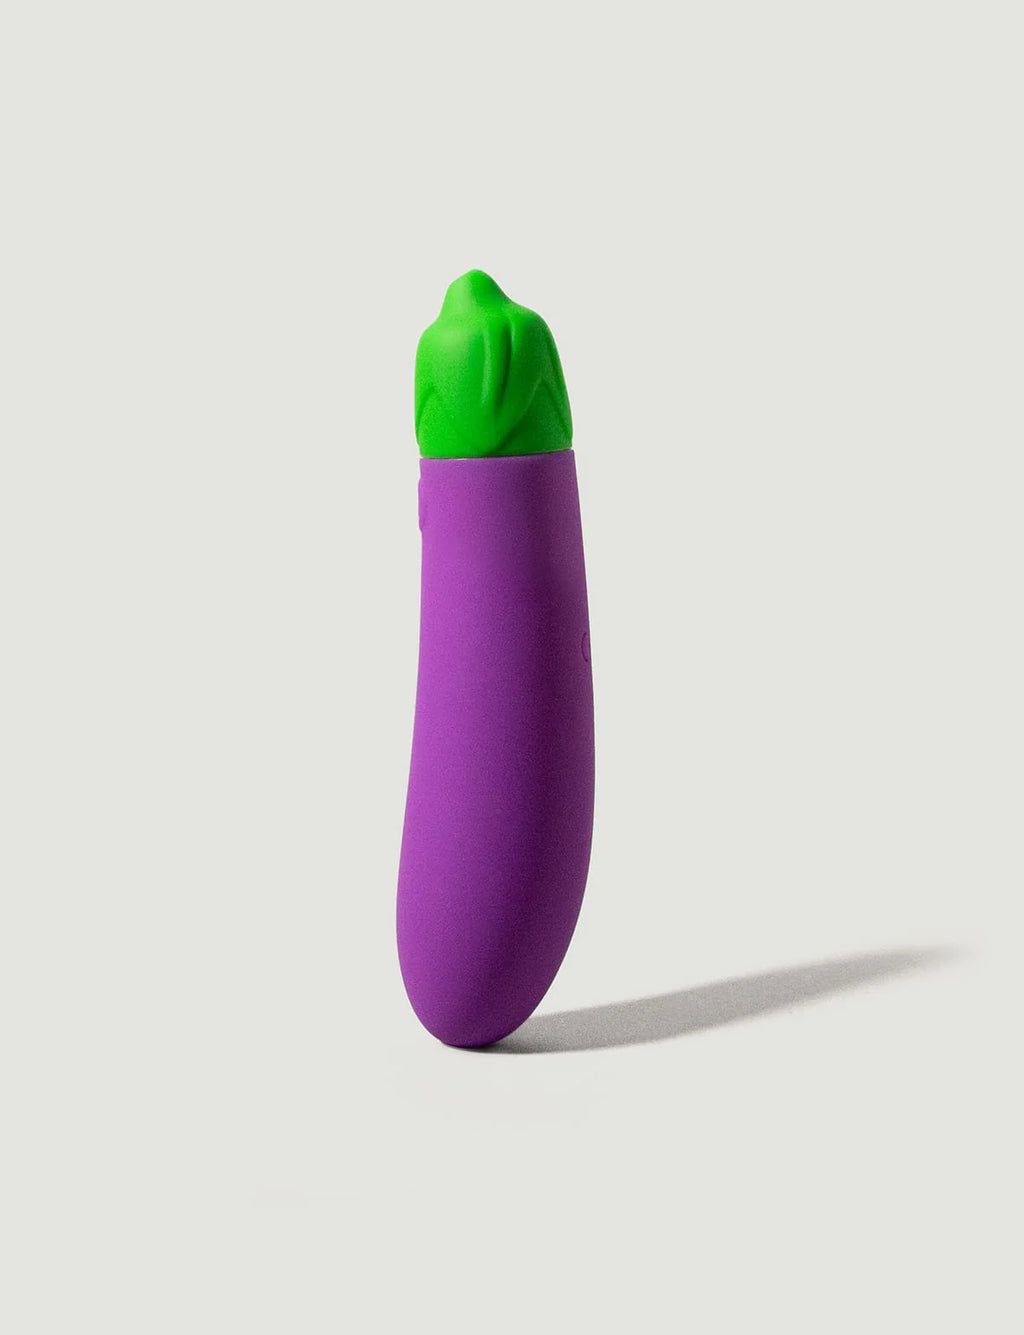 EMOJIBATOR - The Official Eggplant Emoji Vibrator